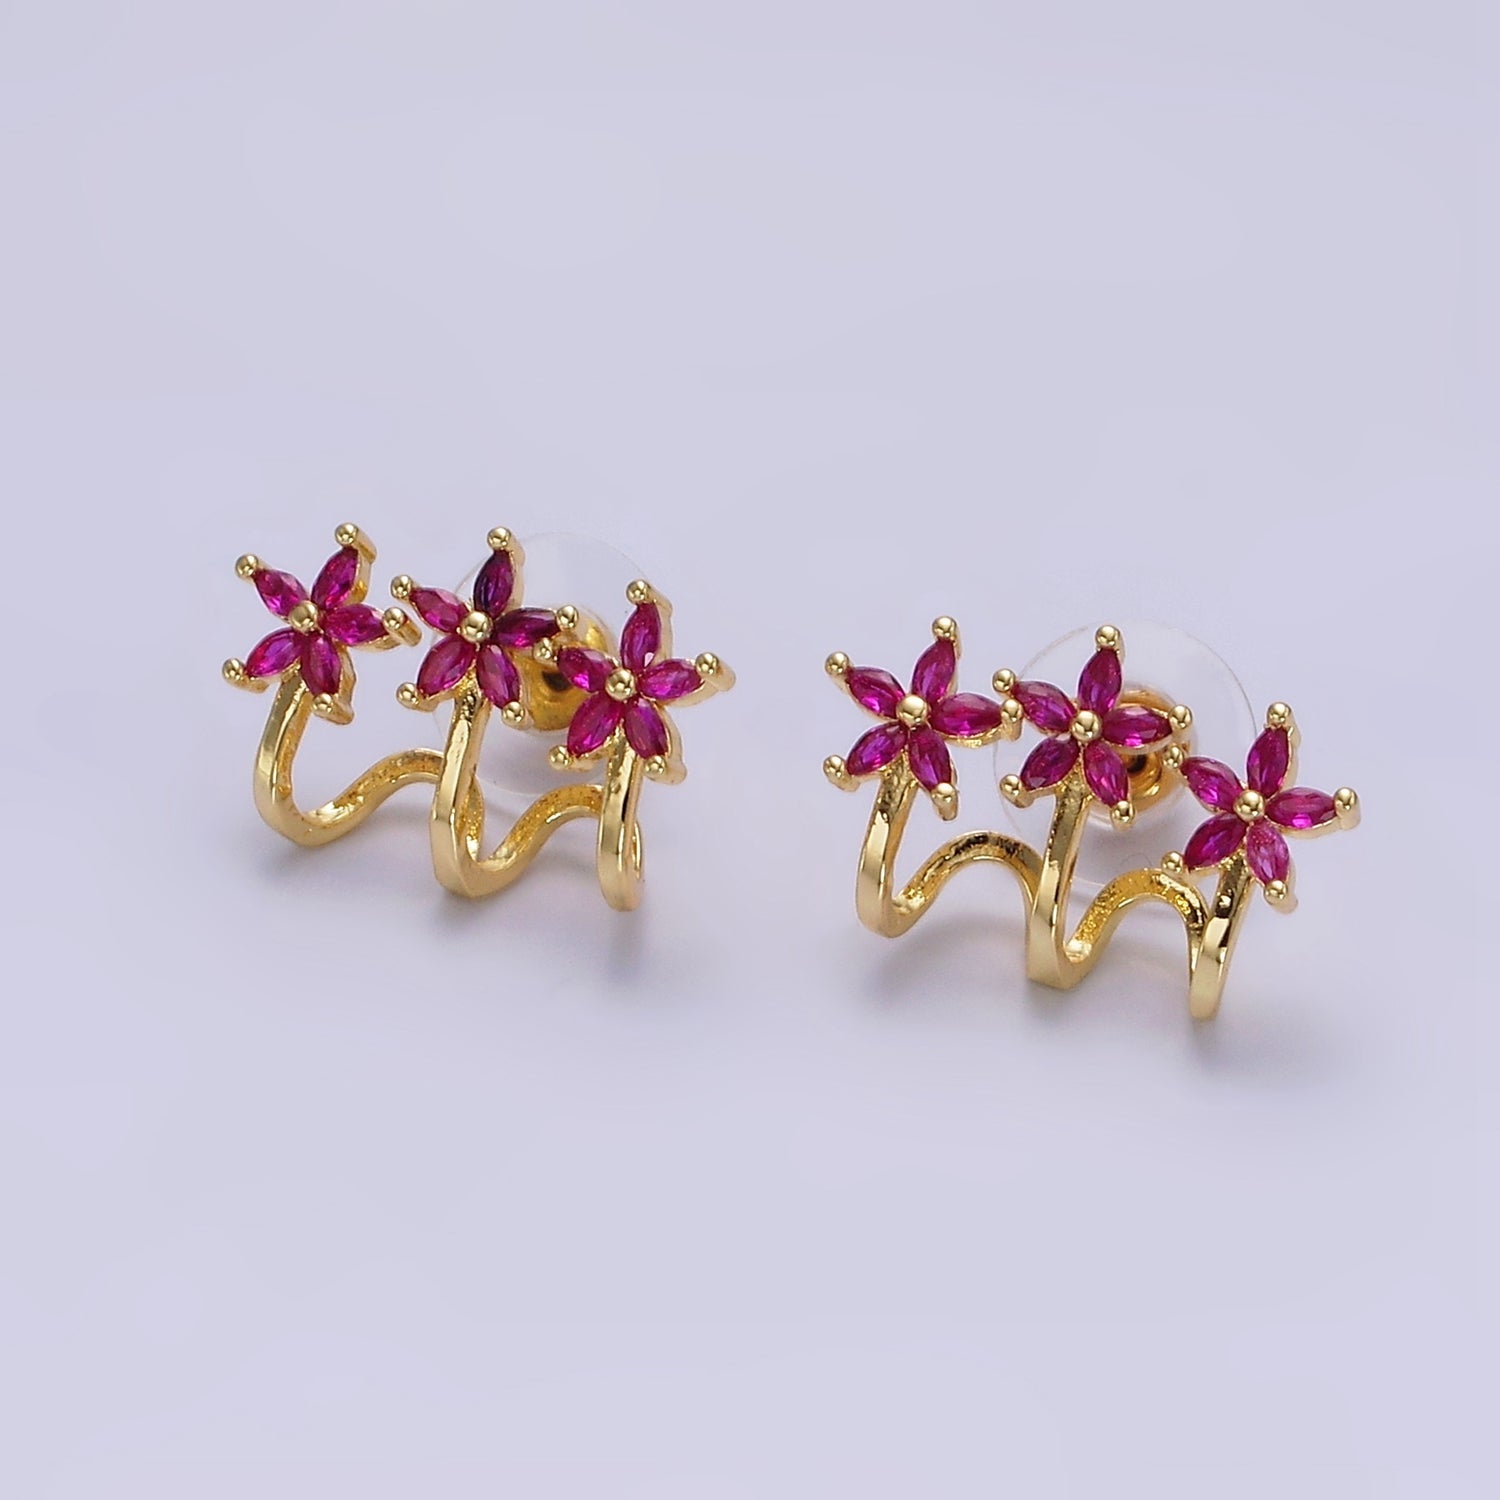 14K Gold Filled Green, Clear Fuchsia Marquise Flower Triple Ear Cuff Stud Earrings Set | AE641 - AE643 - DLUXCA